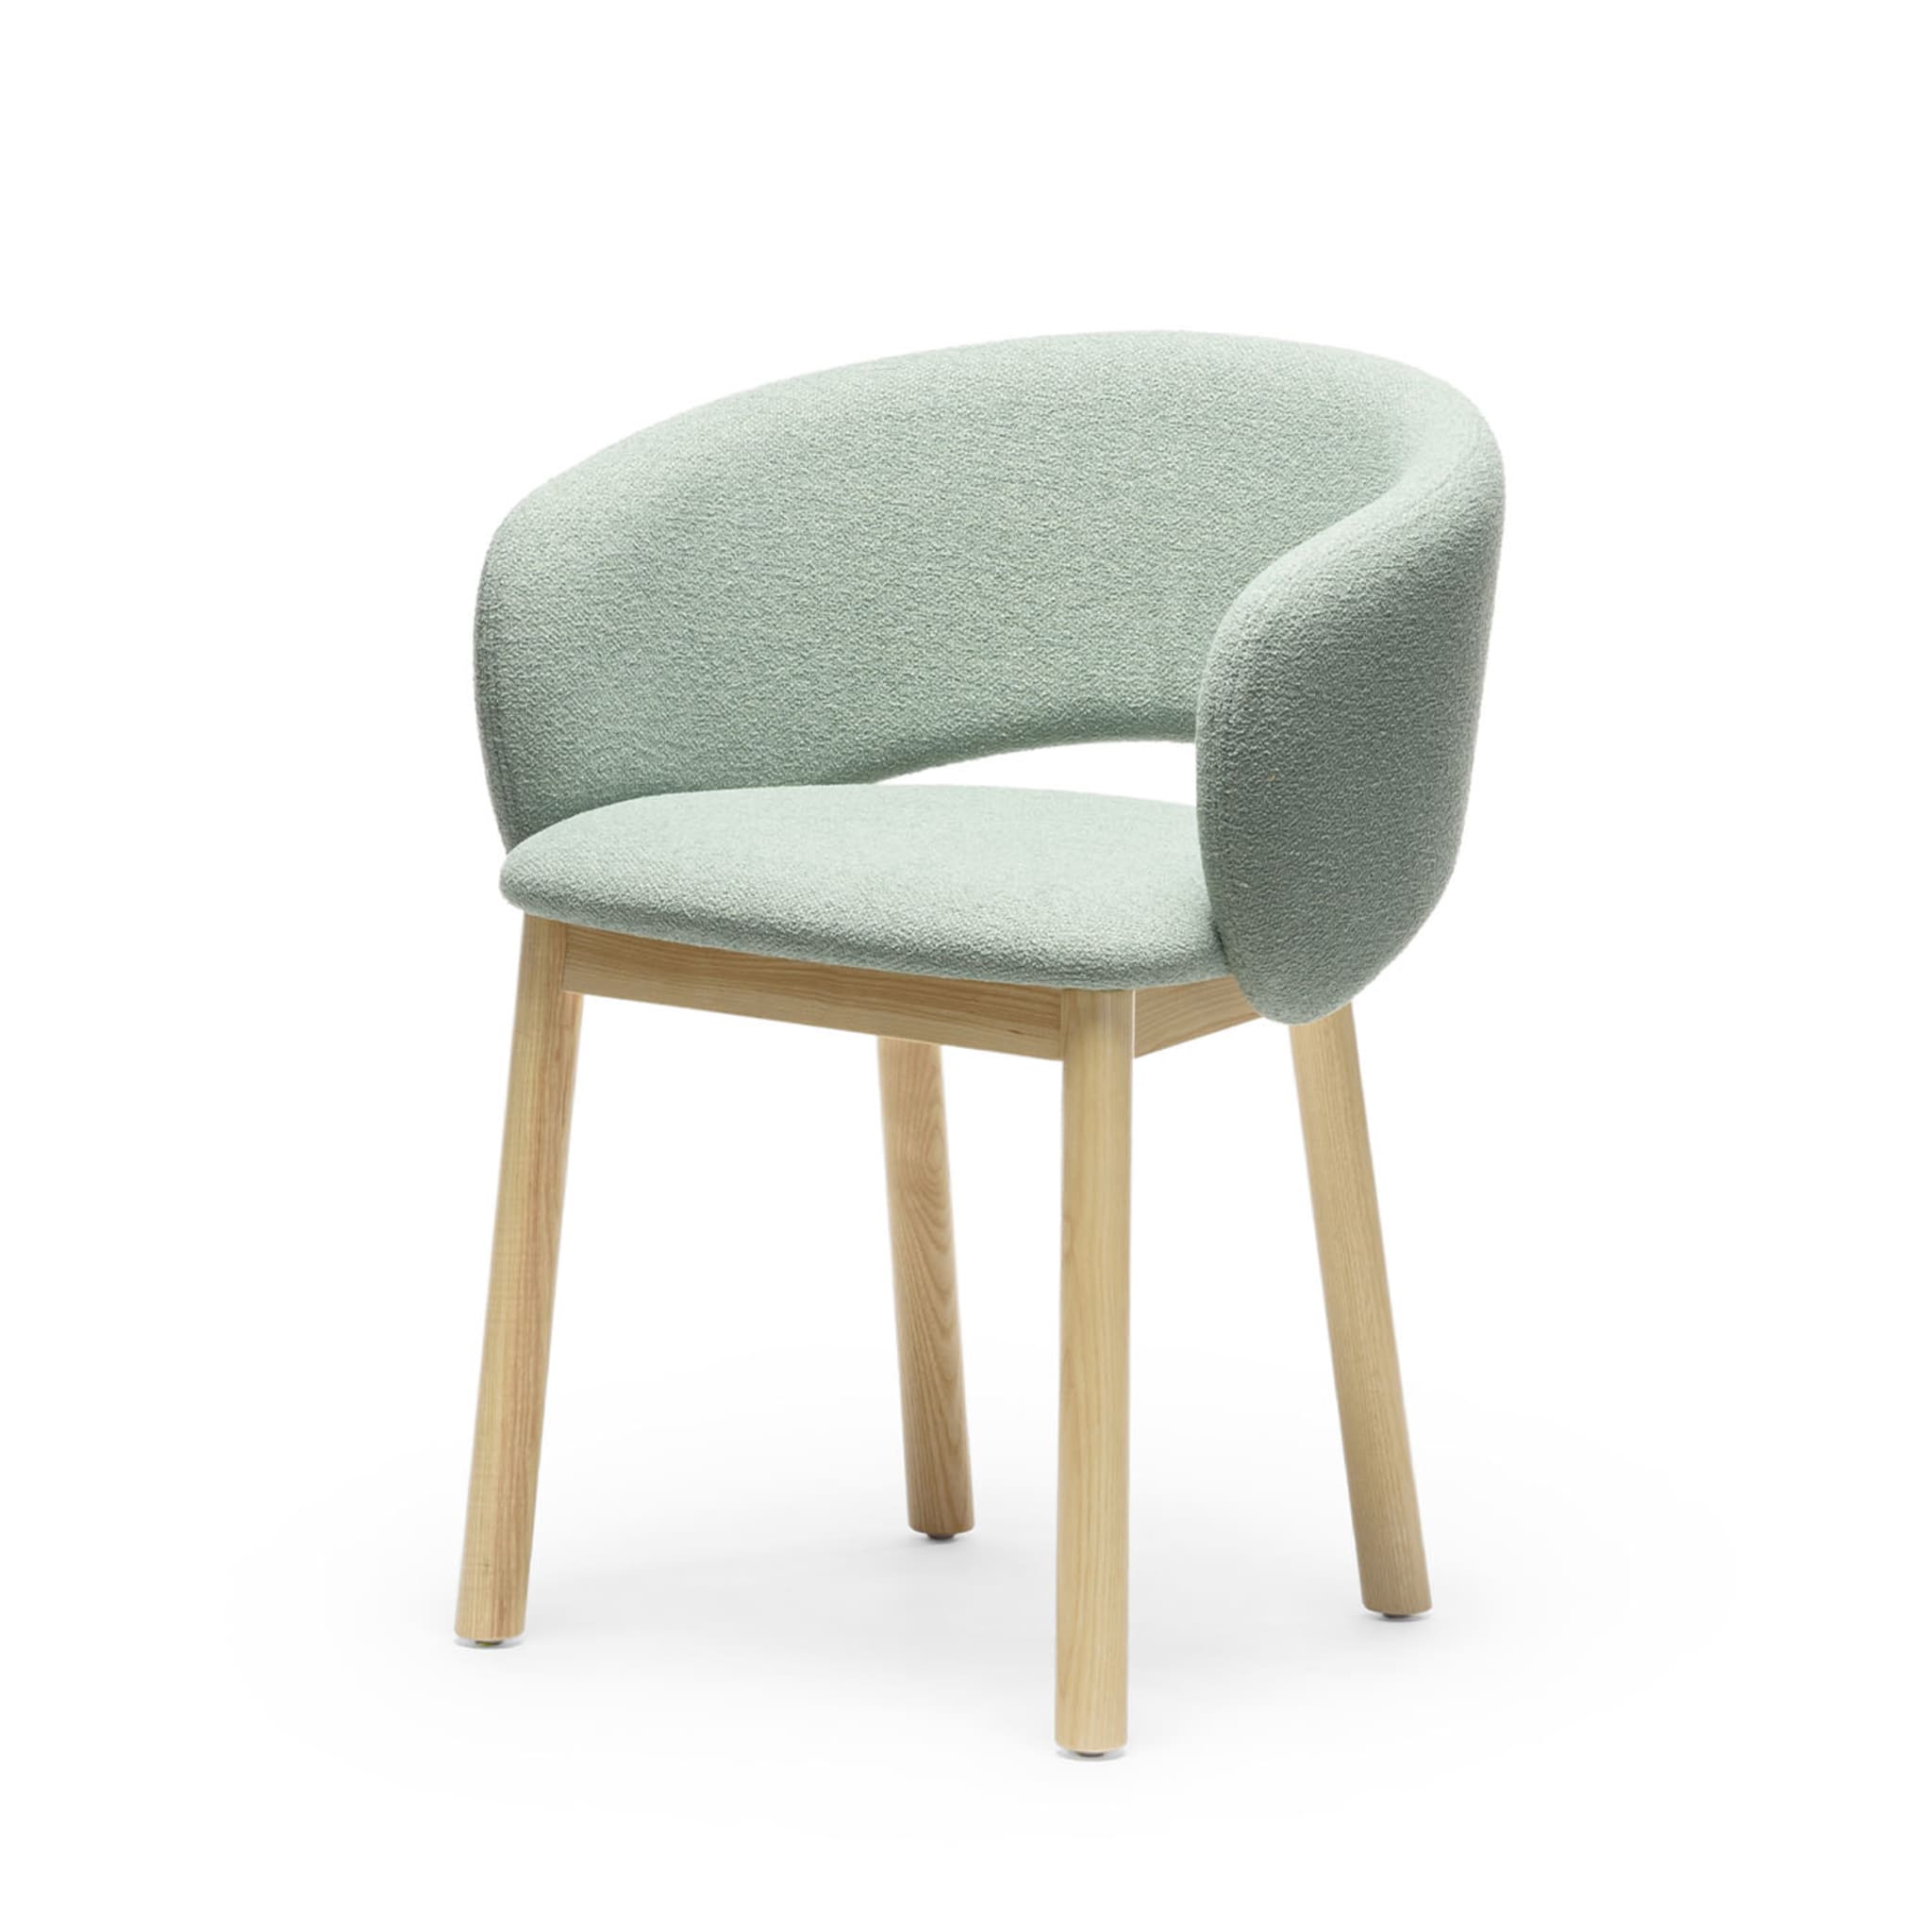 Bel S Light Green Chair By Pablo Regano - Alternative view 3